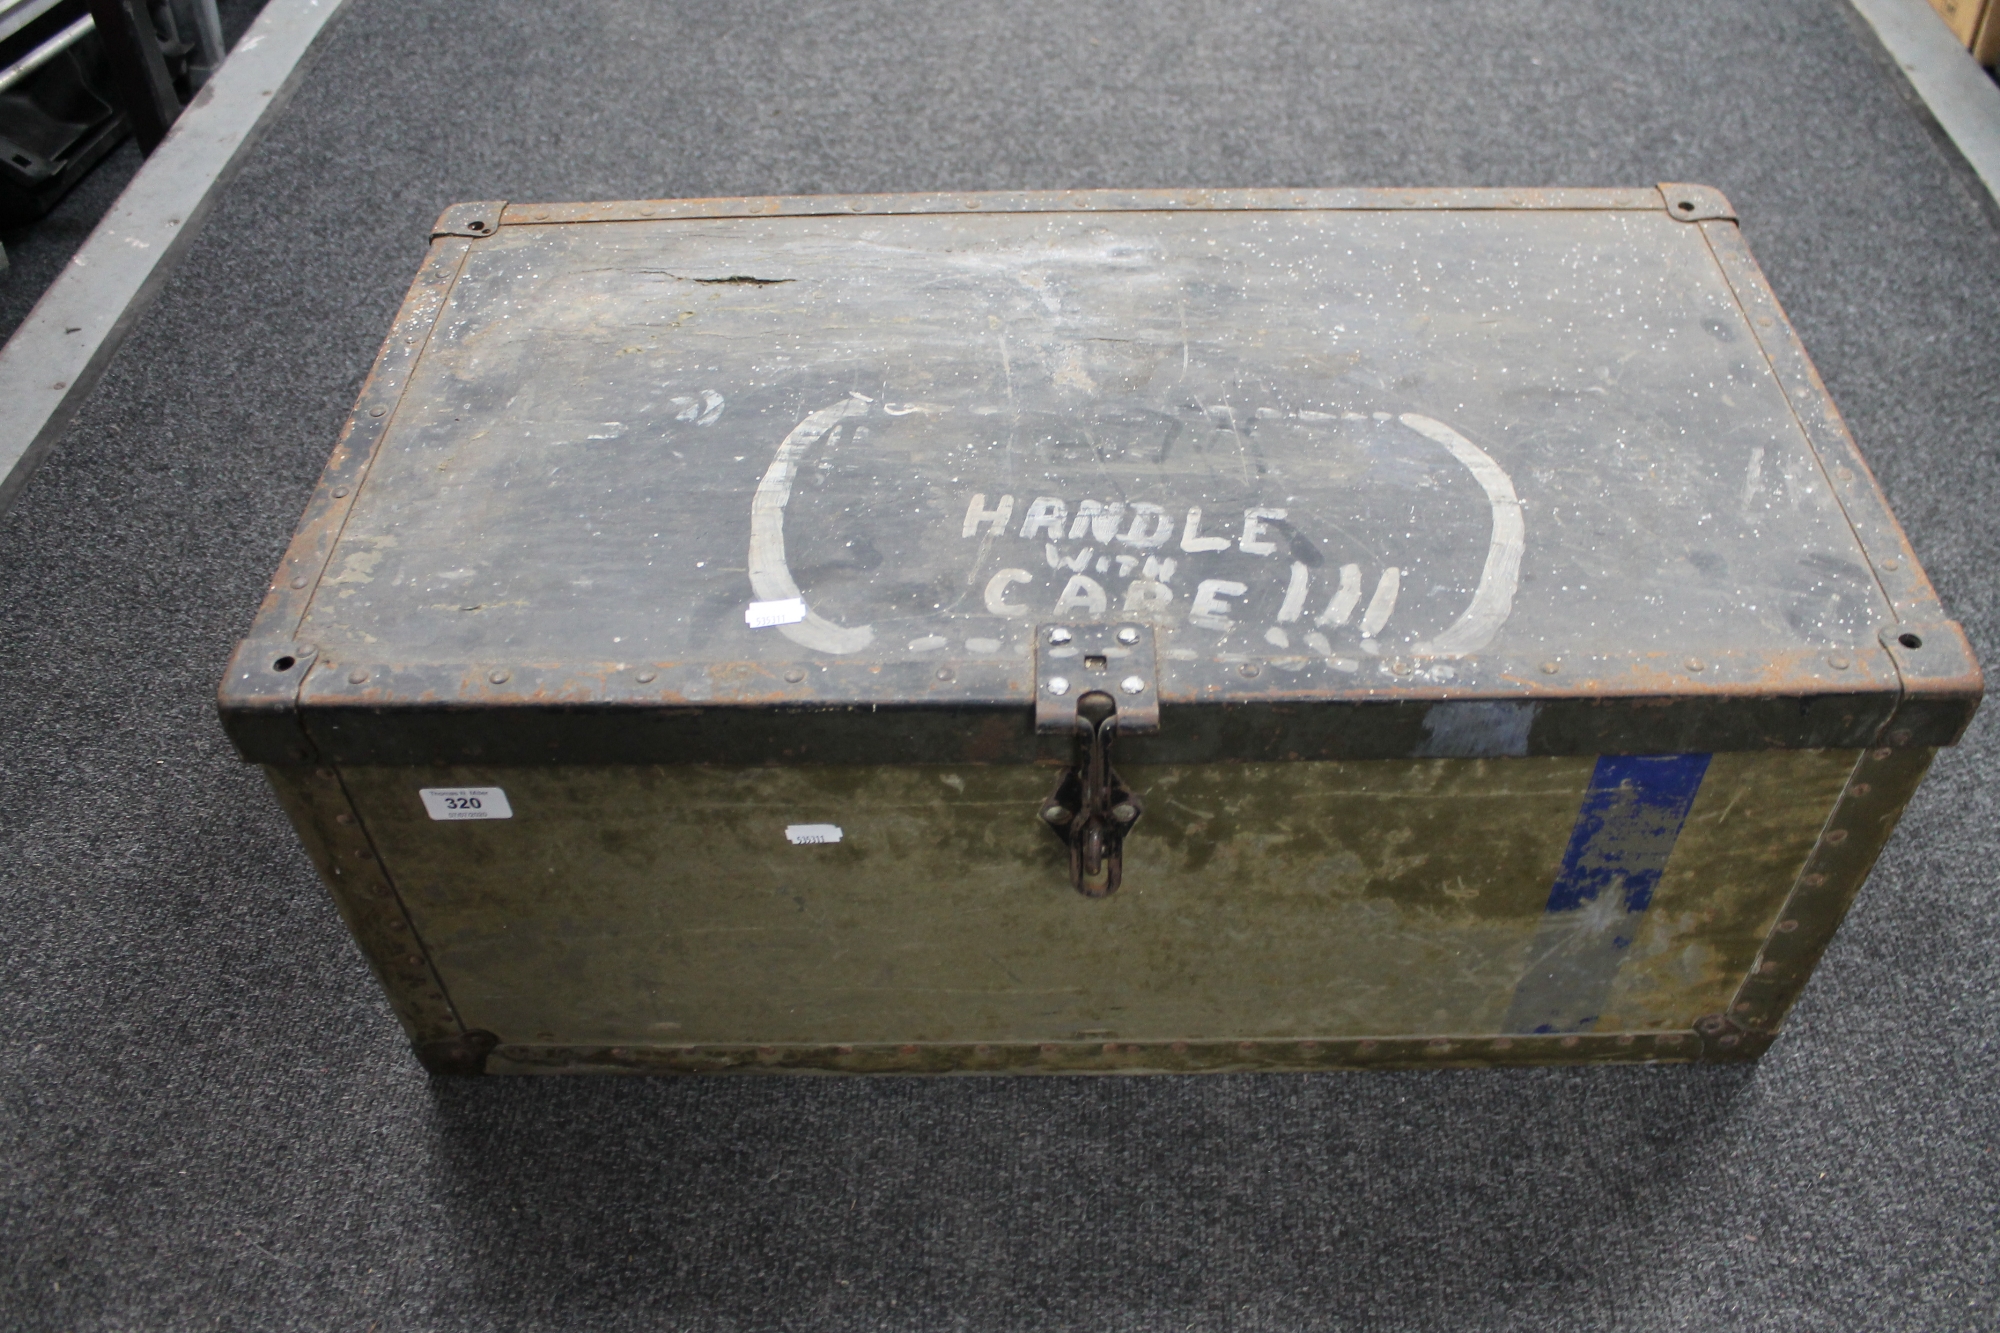 A vintage metal bound trunk